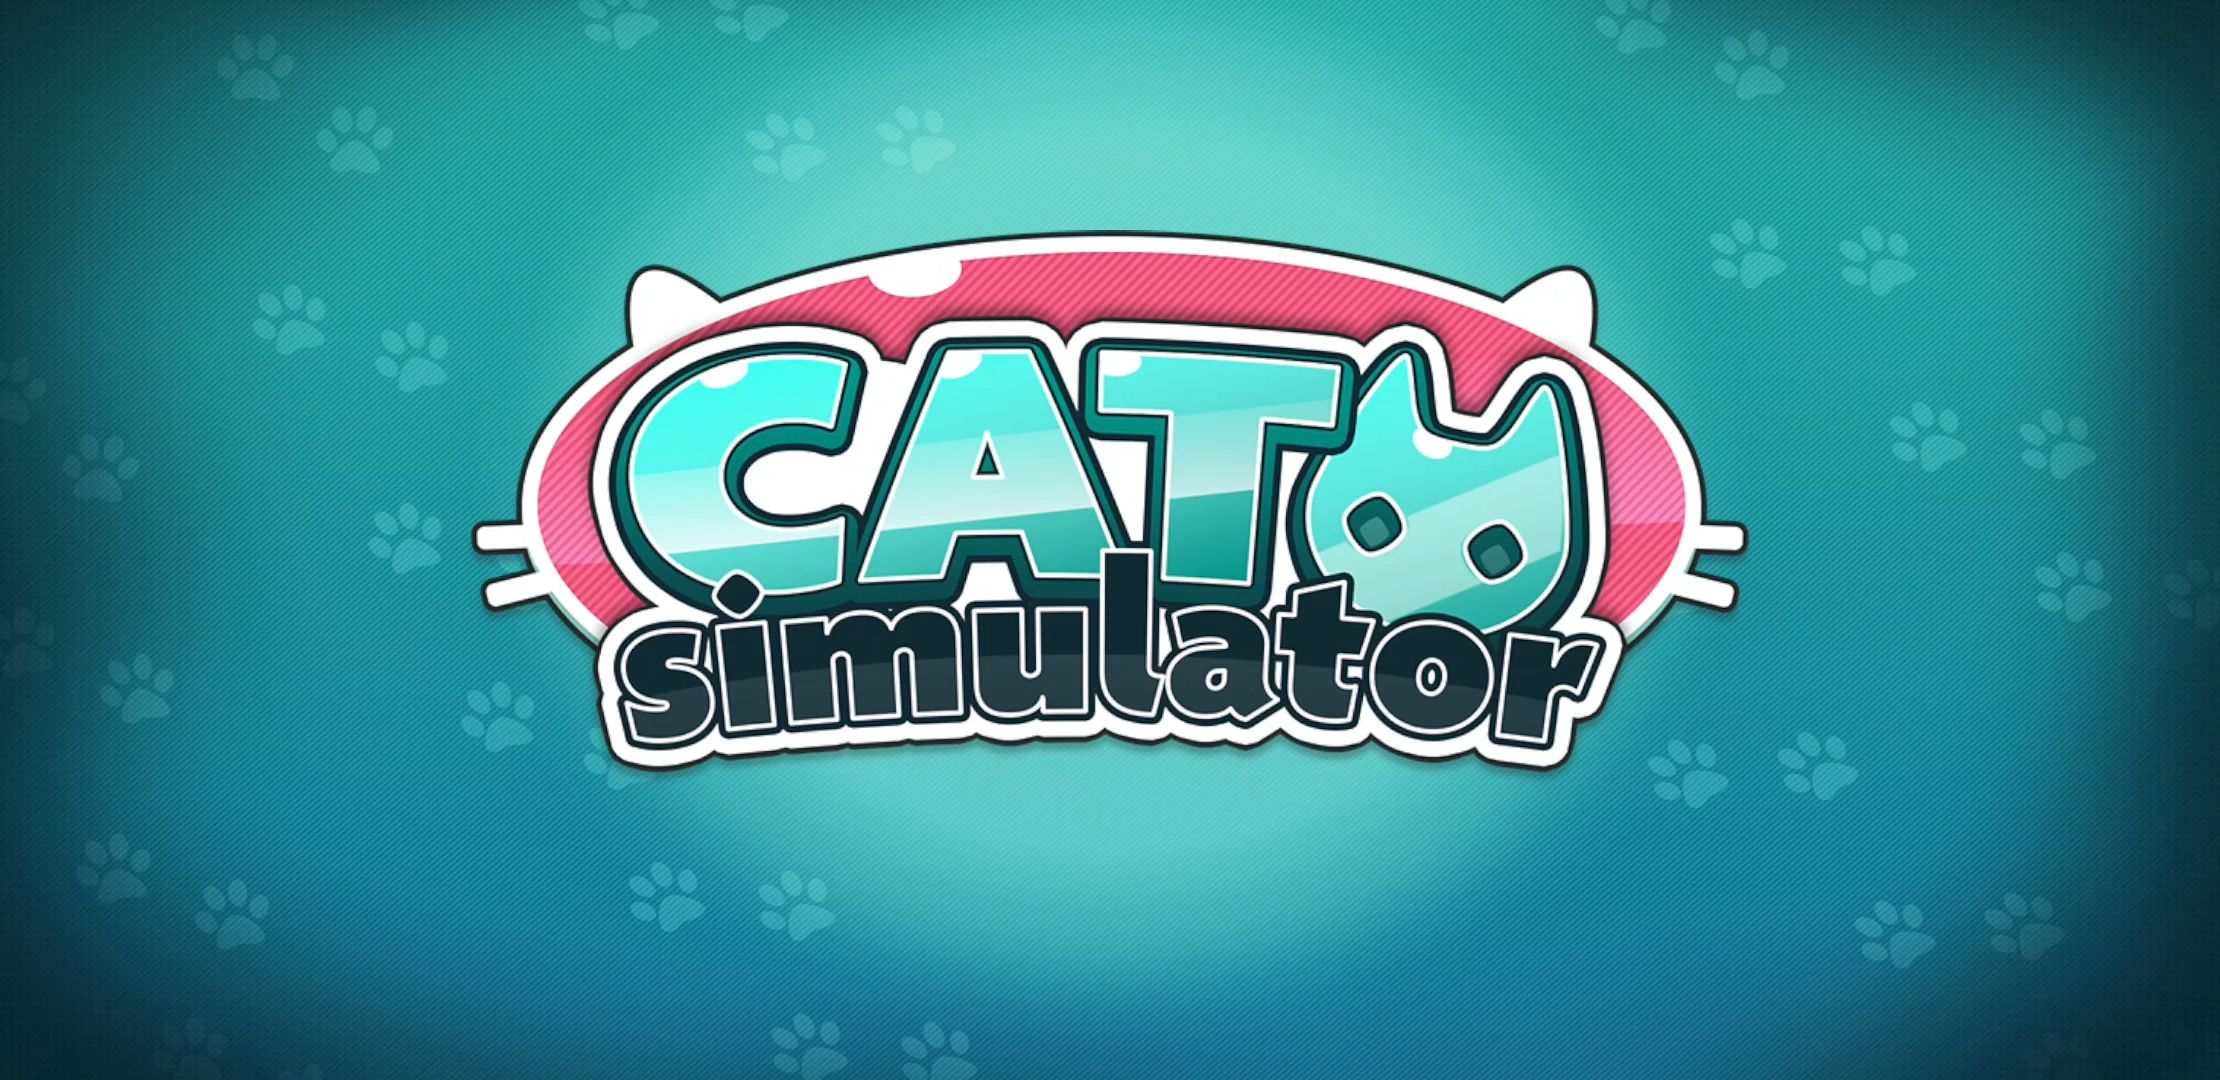 Download Cat Simulator 2 Android free game.